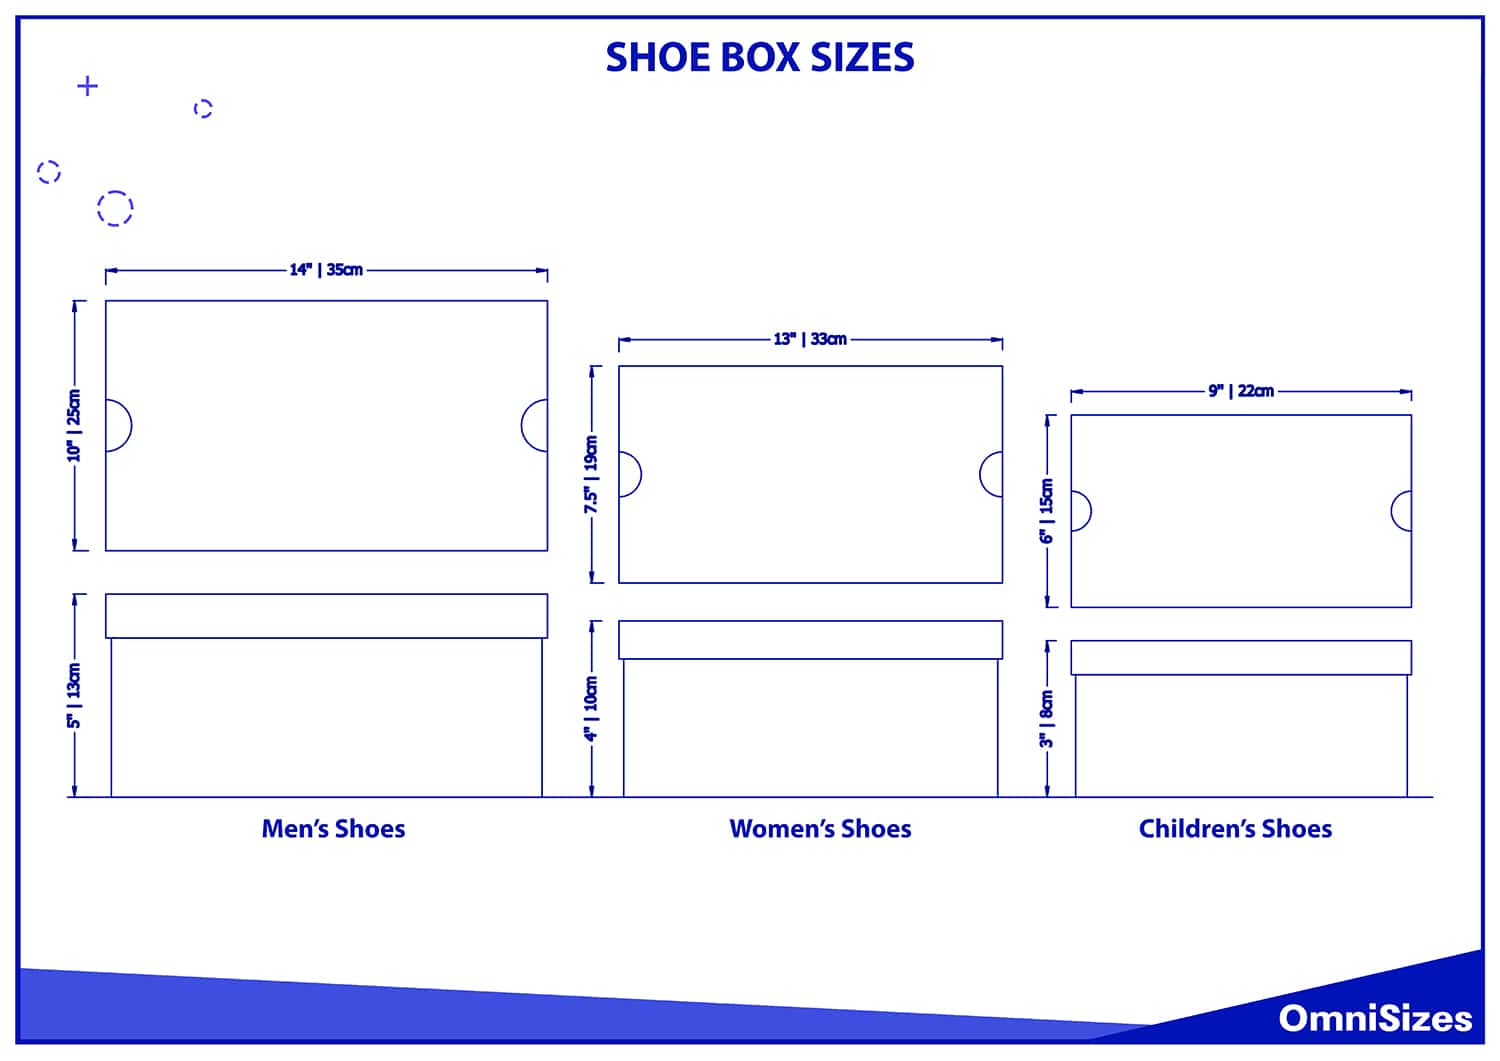 Shoe box sizes